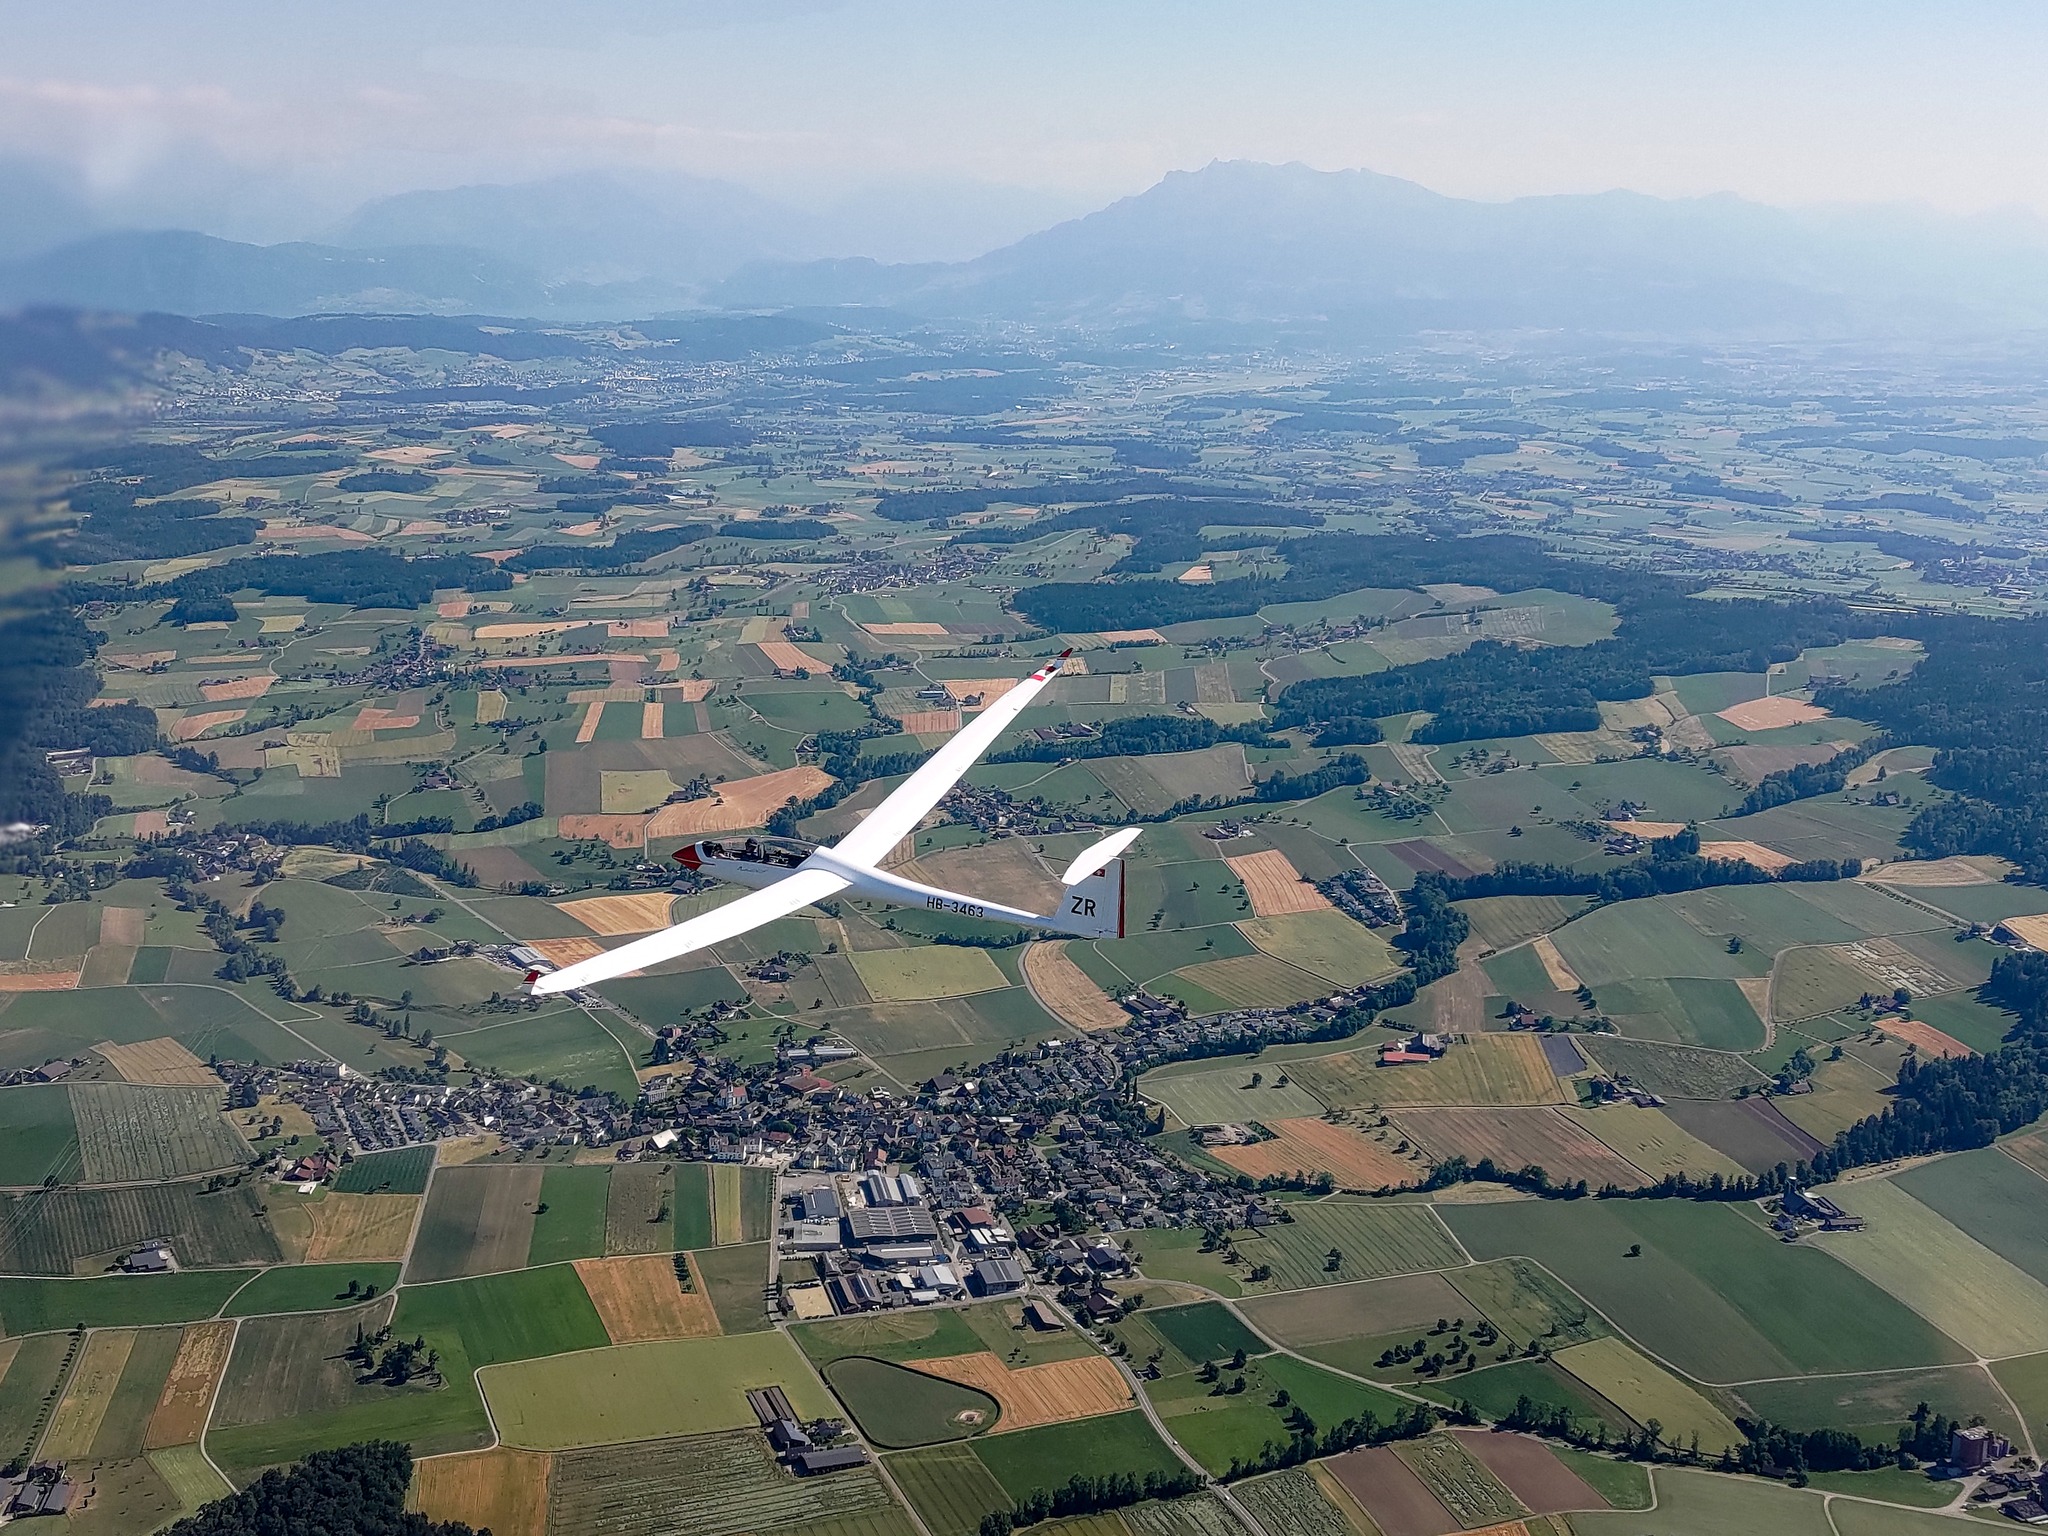 Only a few more kilometers to the alps. #soaring #segelflug #segelfliegen #volavoile #glidingpictures #pilotlife #arcus #schempphirth #aviation #sfvs_fsvv #sgzuerich @sg_zuerich